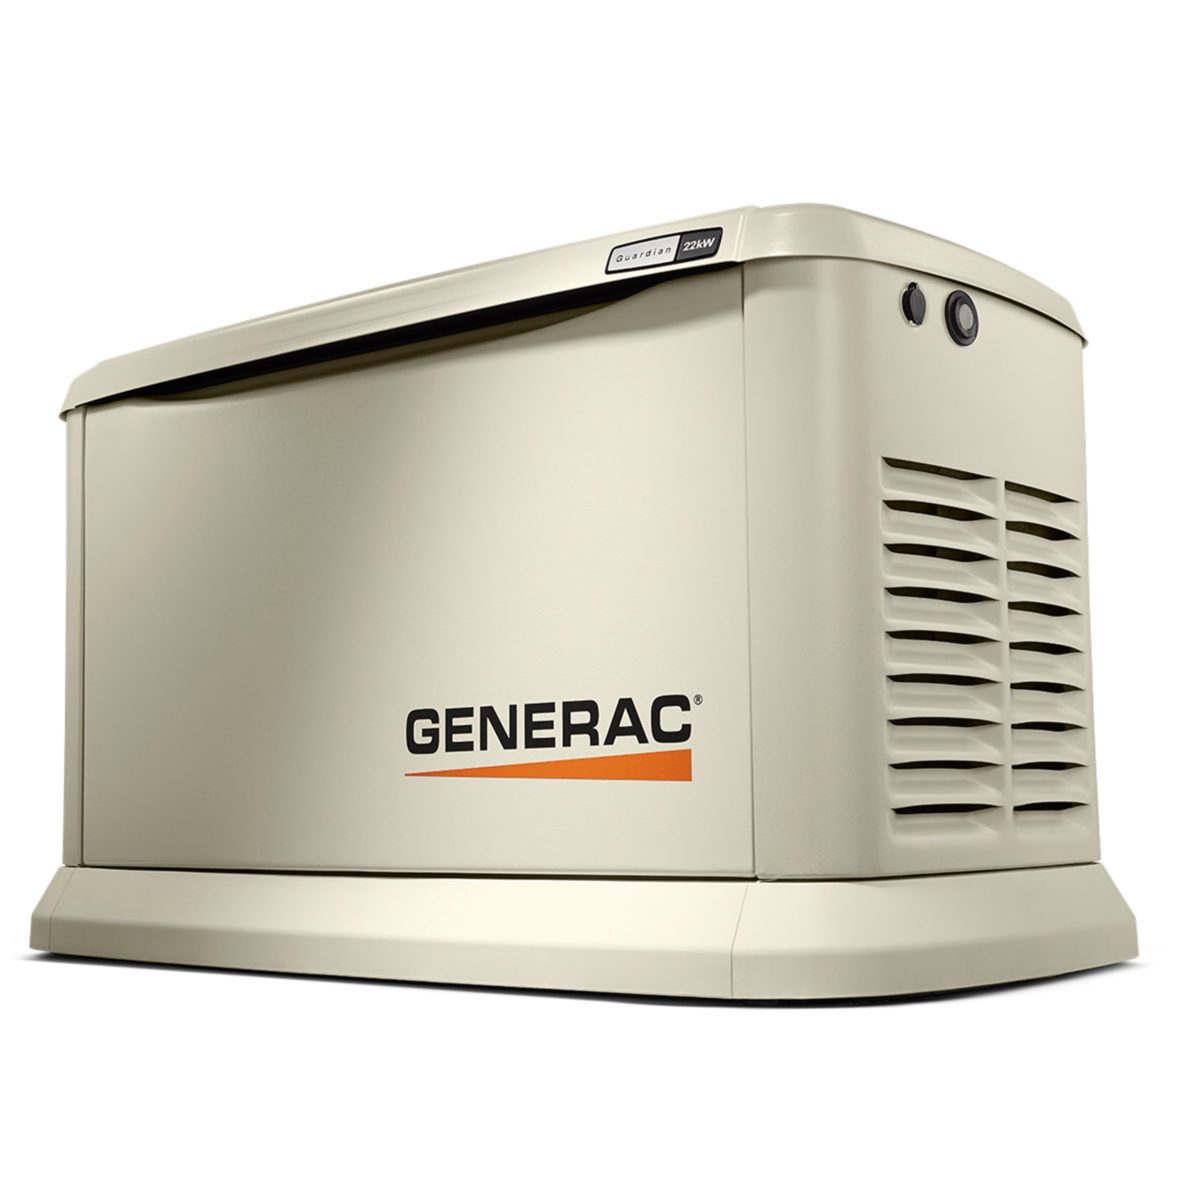 Choosing a Generac Emergency Generator for Your Home